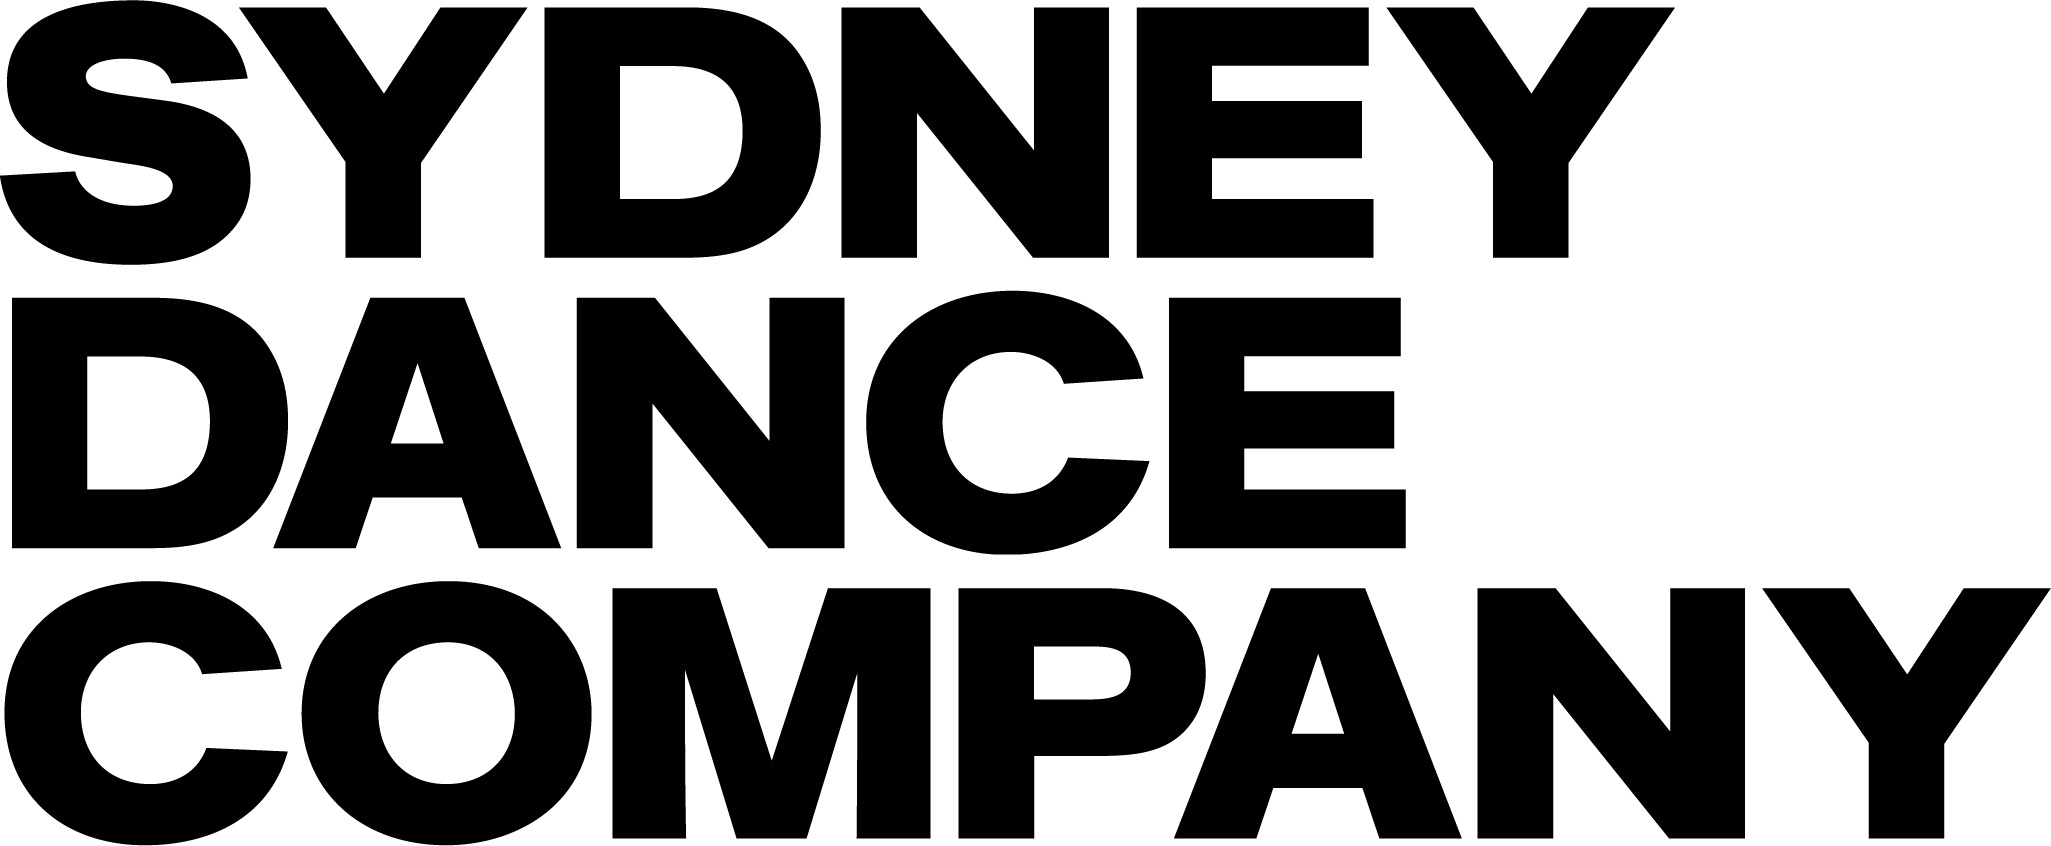 Sydney Dance Company Logo KAM 2021